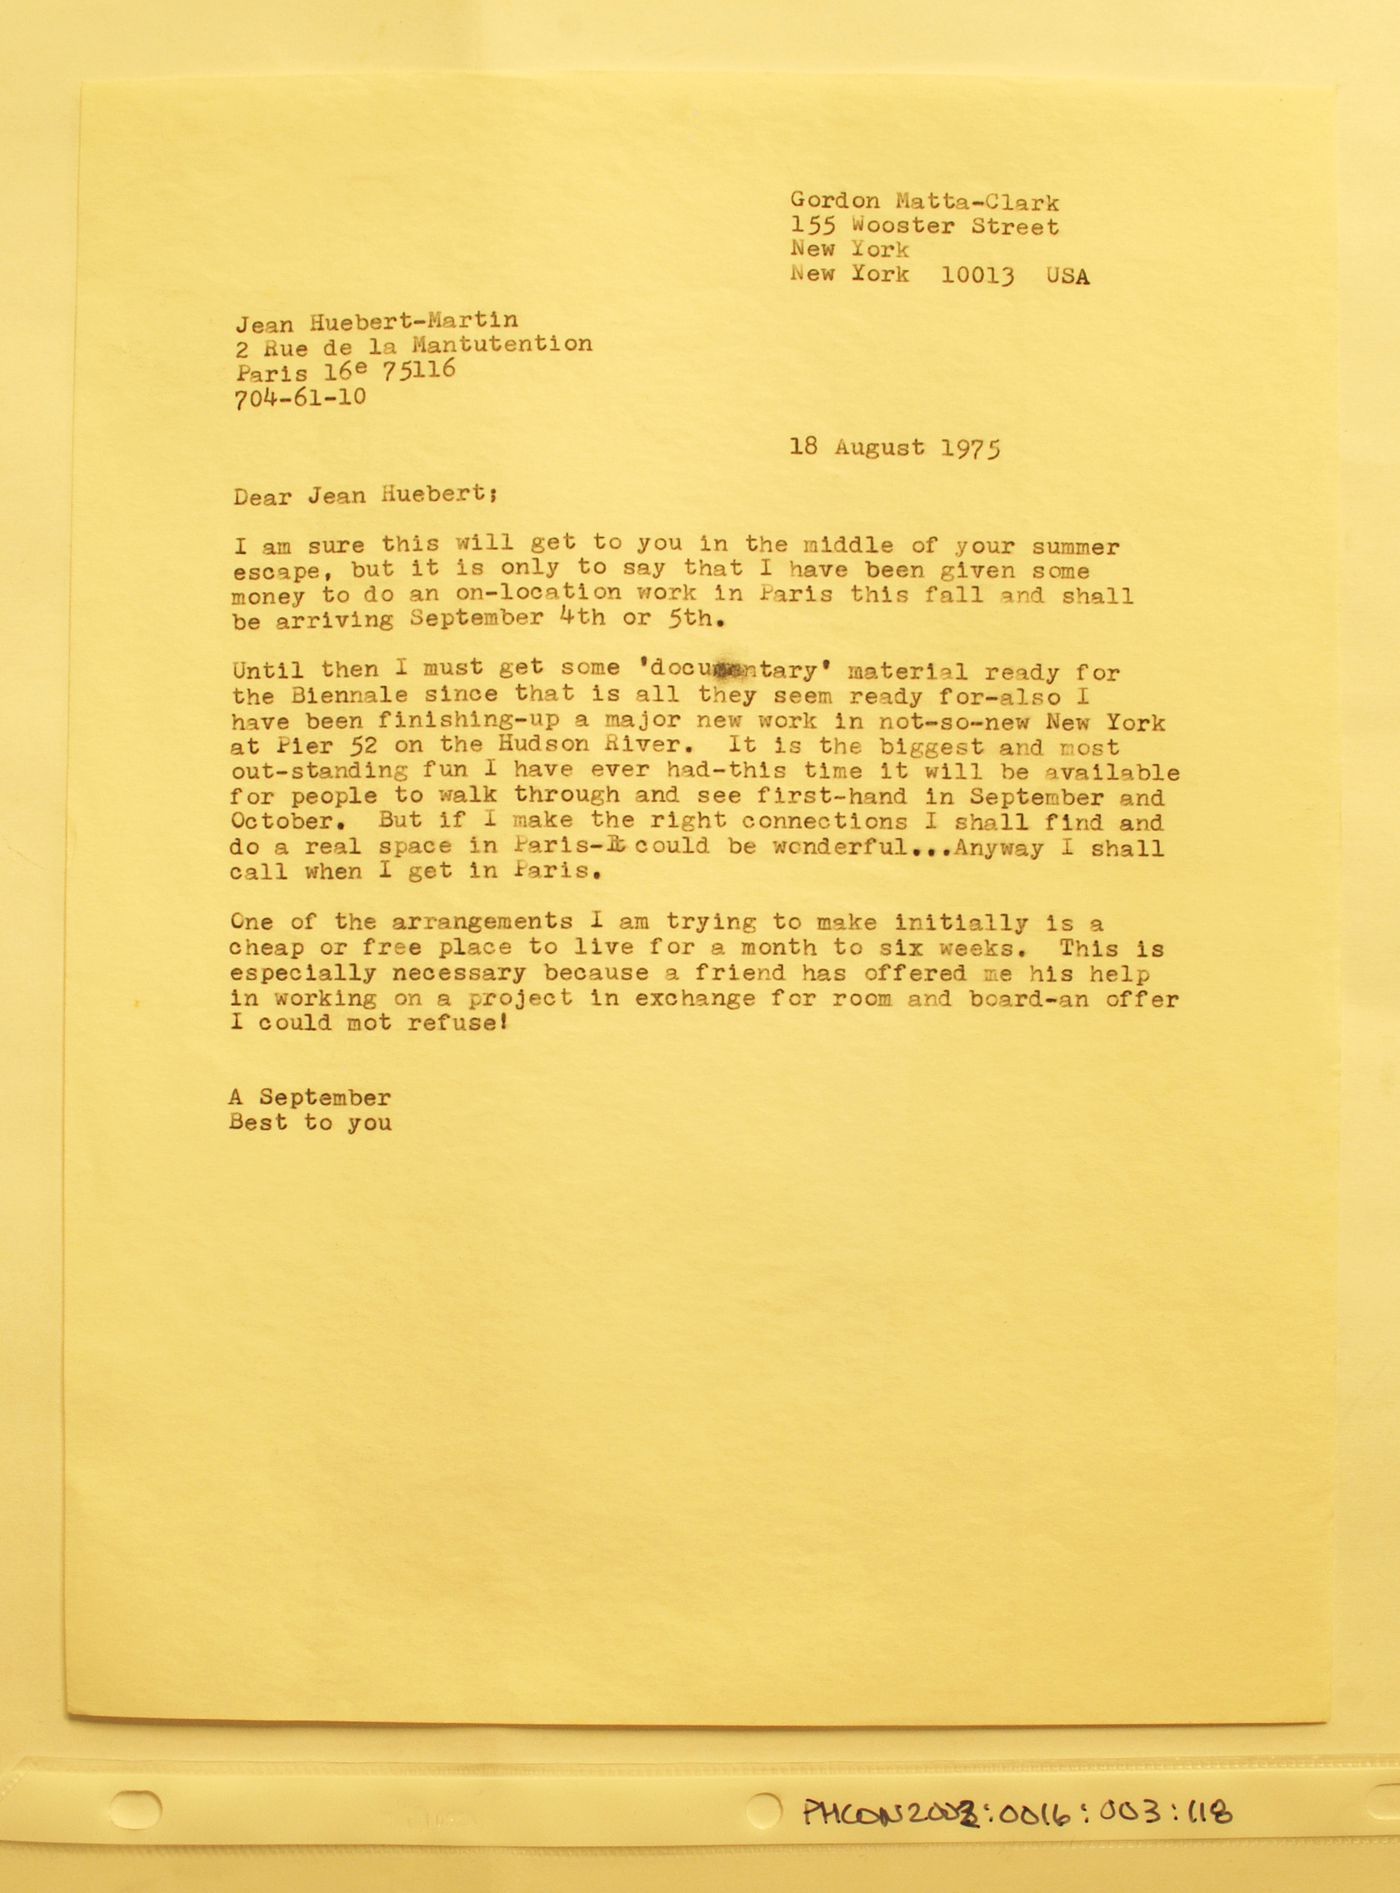 Letter from Gordon Matta-Clark to Jean-Hubert Martin